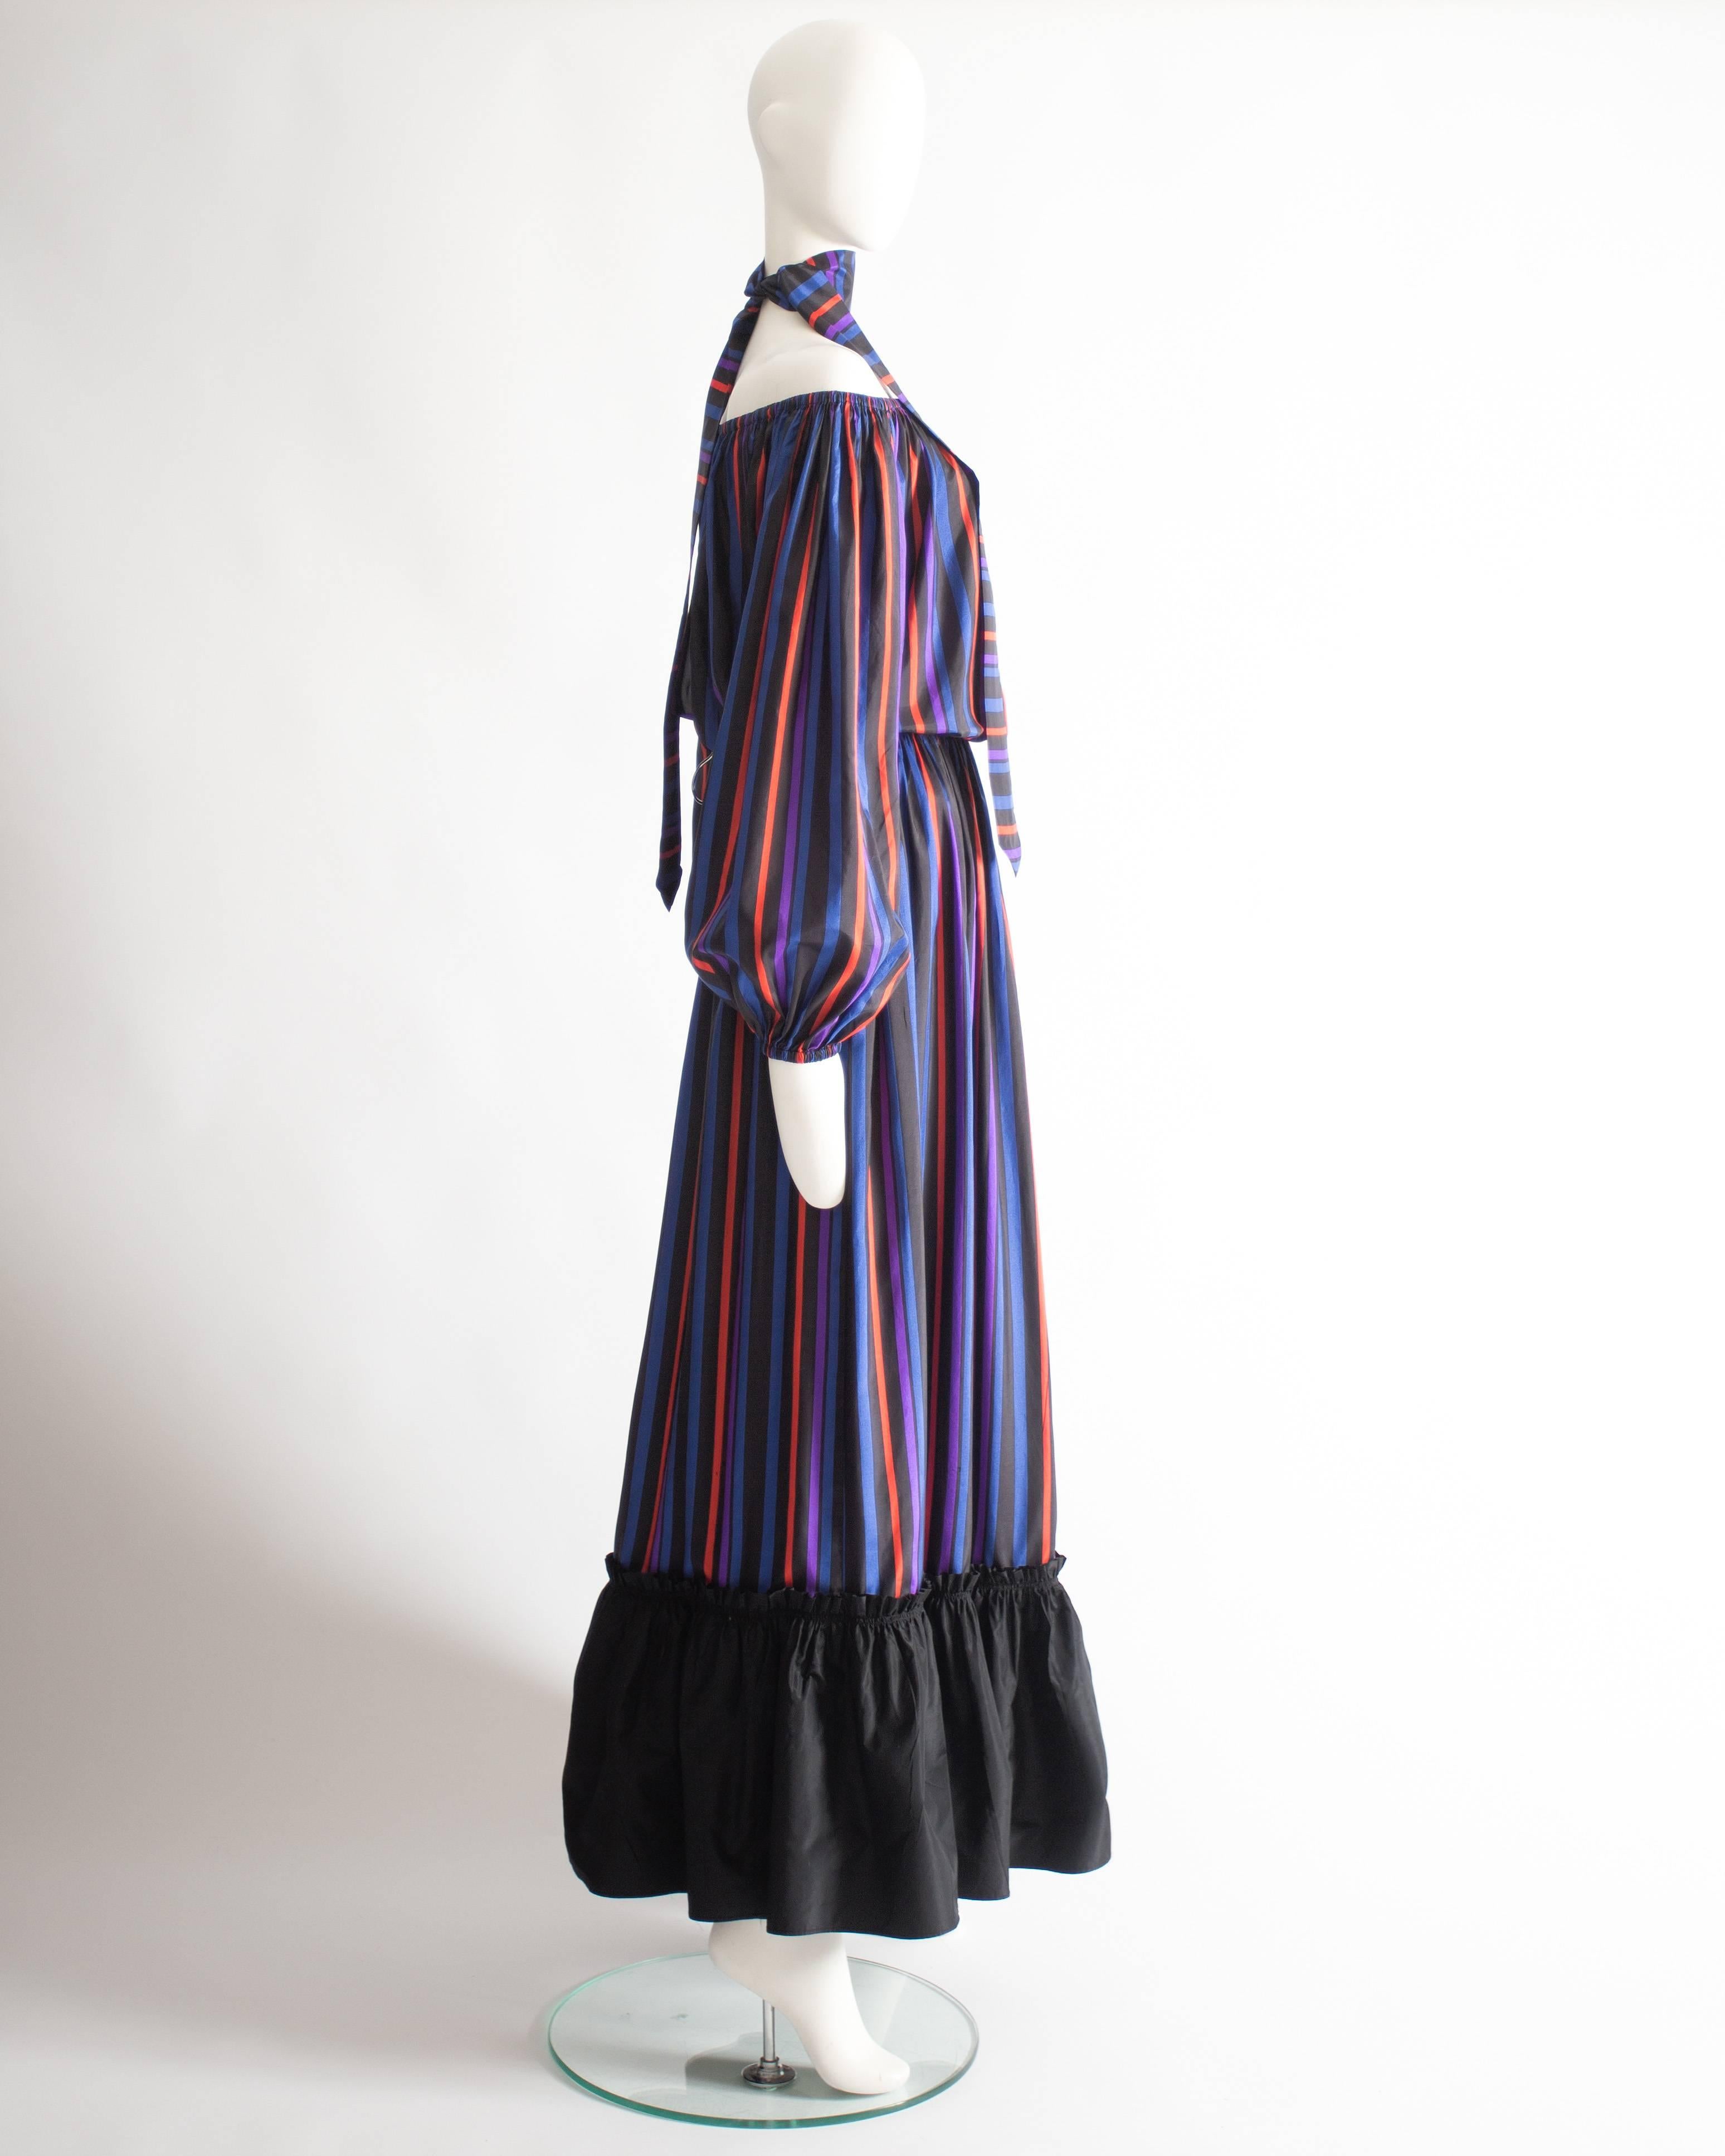 Women's Lanvin Haute Couture silk taffeta off-the-shoulder evening dress, circa 1976